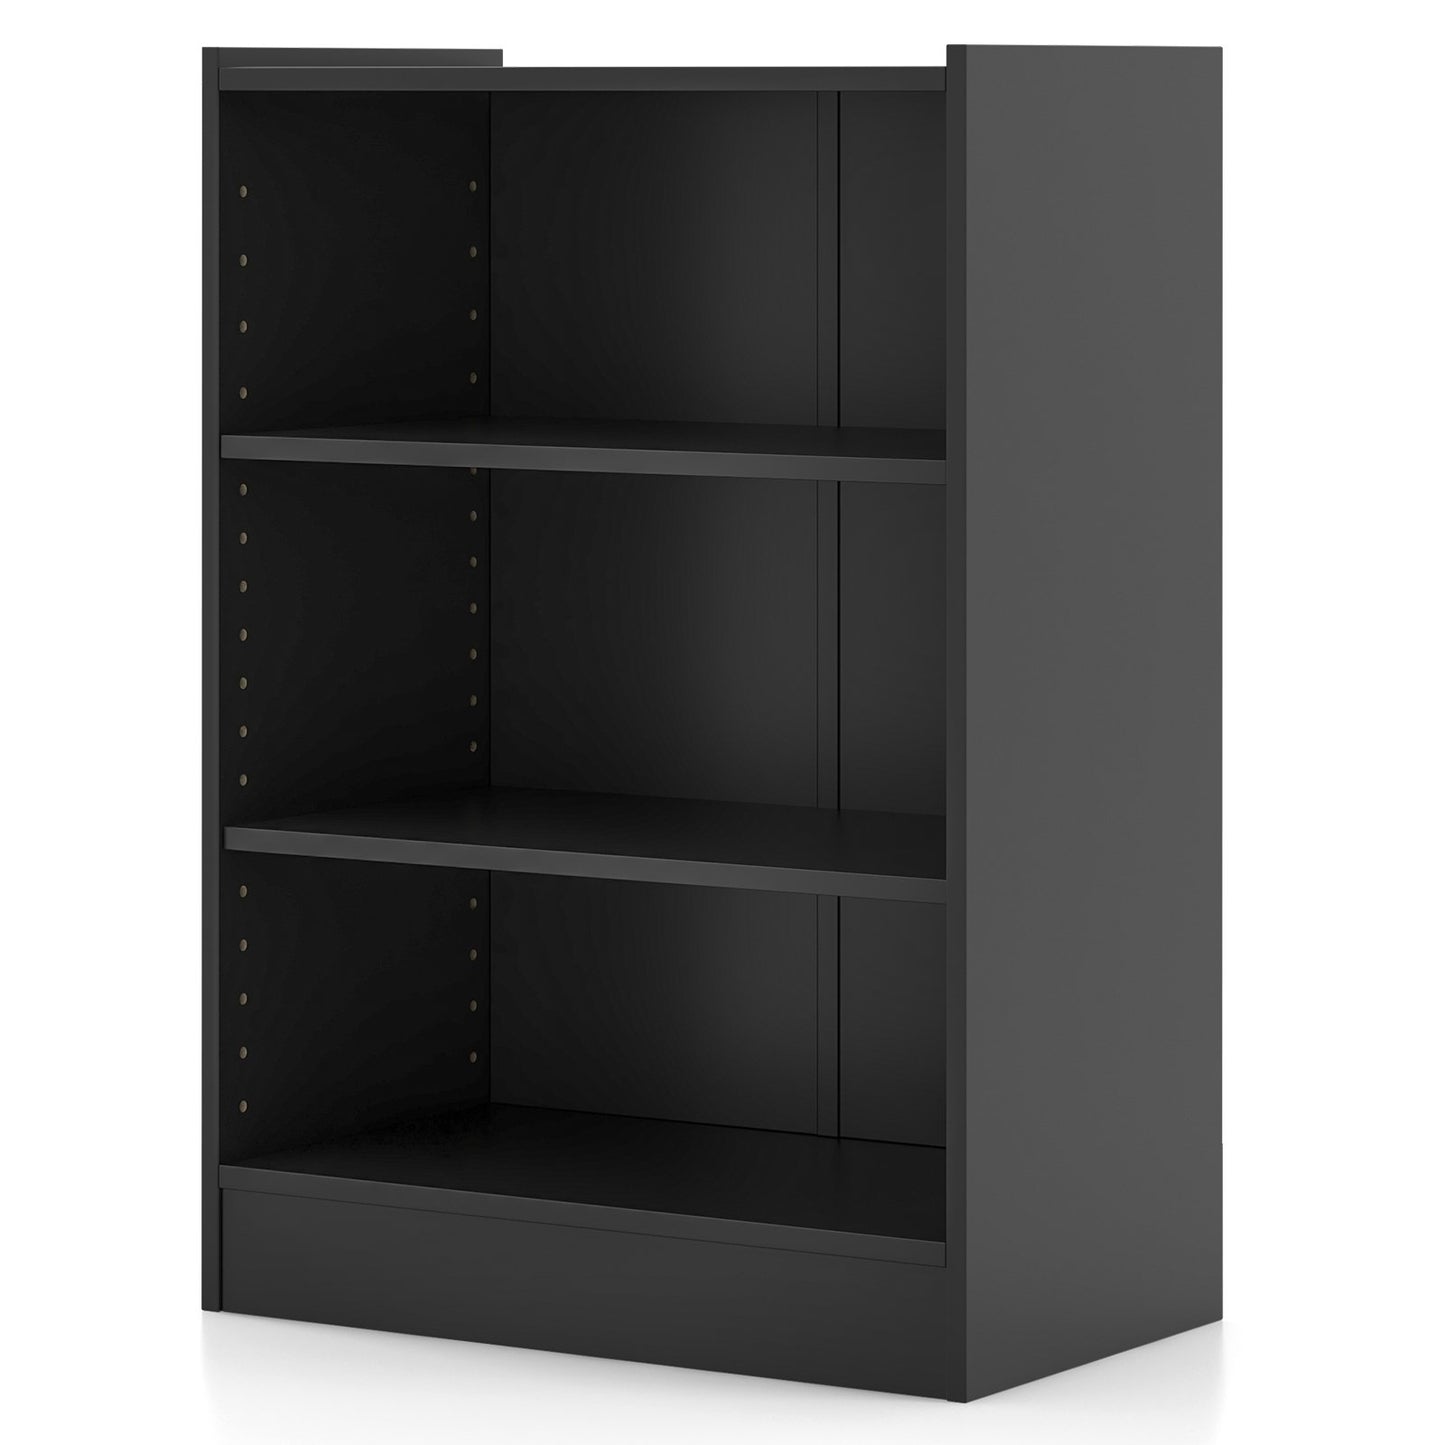 3-Tier Bookcase Open Display Rack Cabinet with Adjustable Shelves, Black